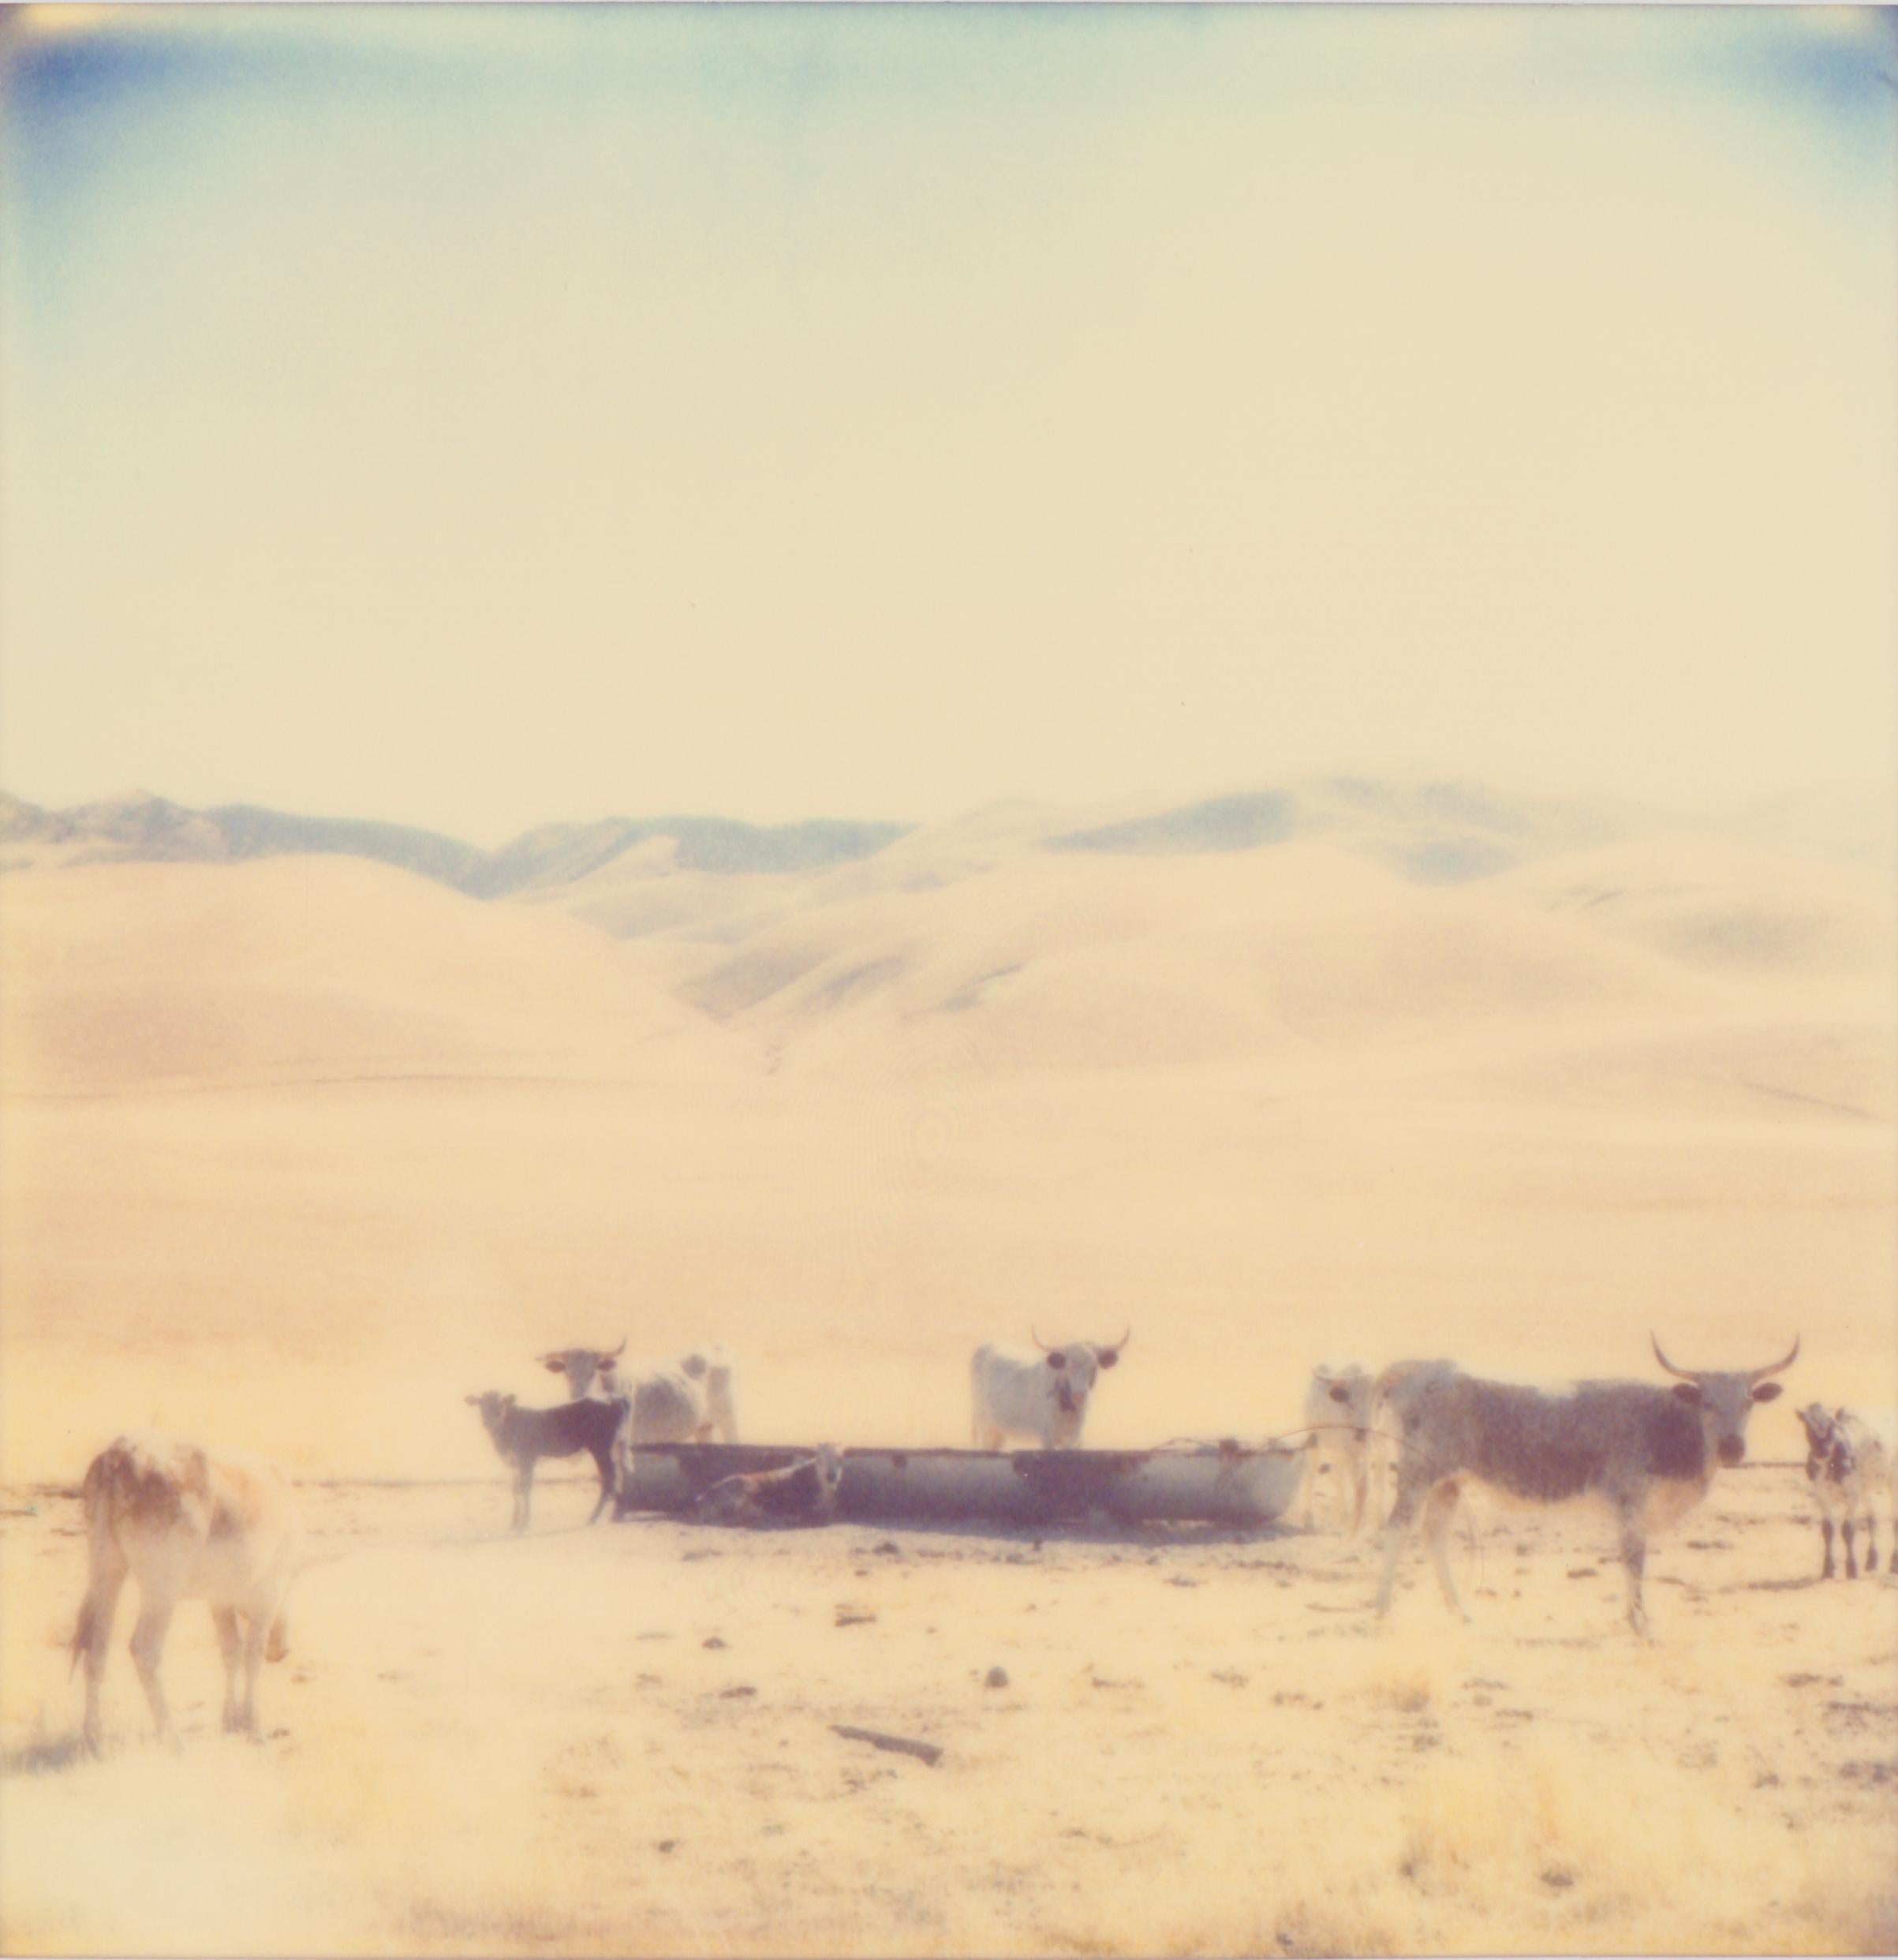 Oilfields, diptych - Contemporary, Polaroid, 21st Century, Color, Landscape - Photograph by Stefanie Schneider